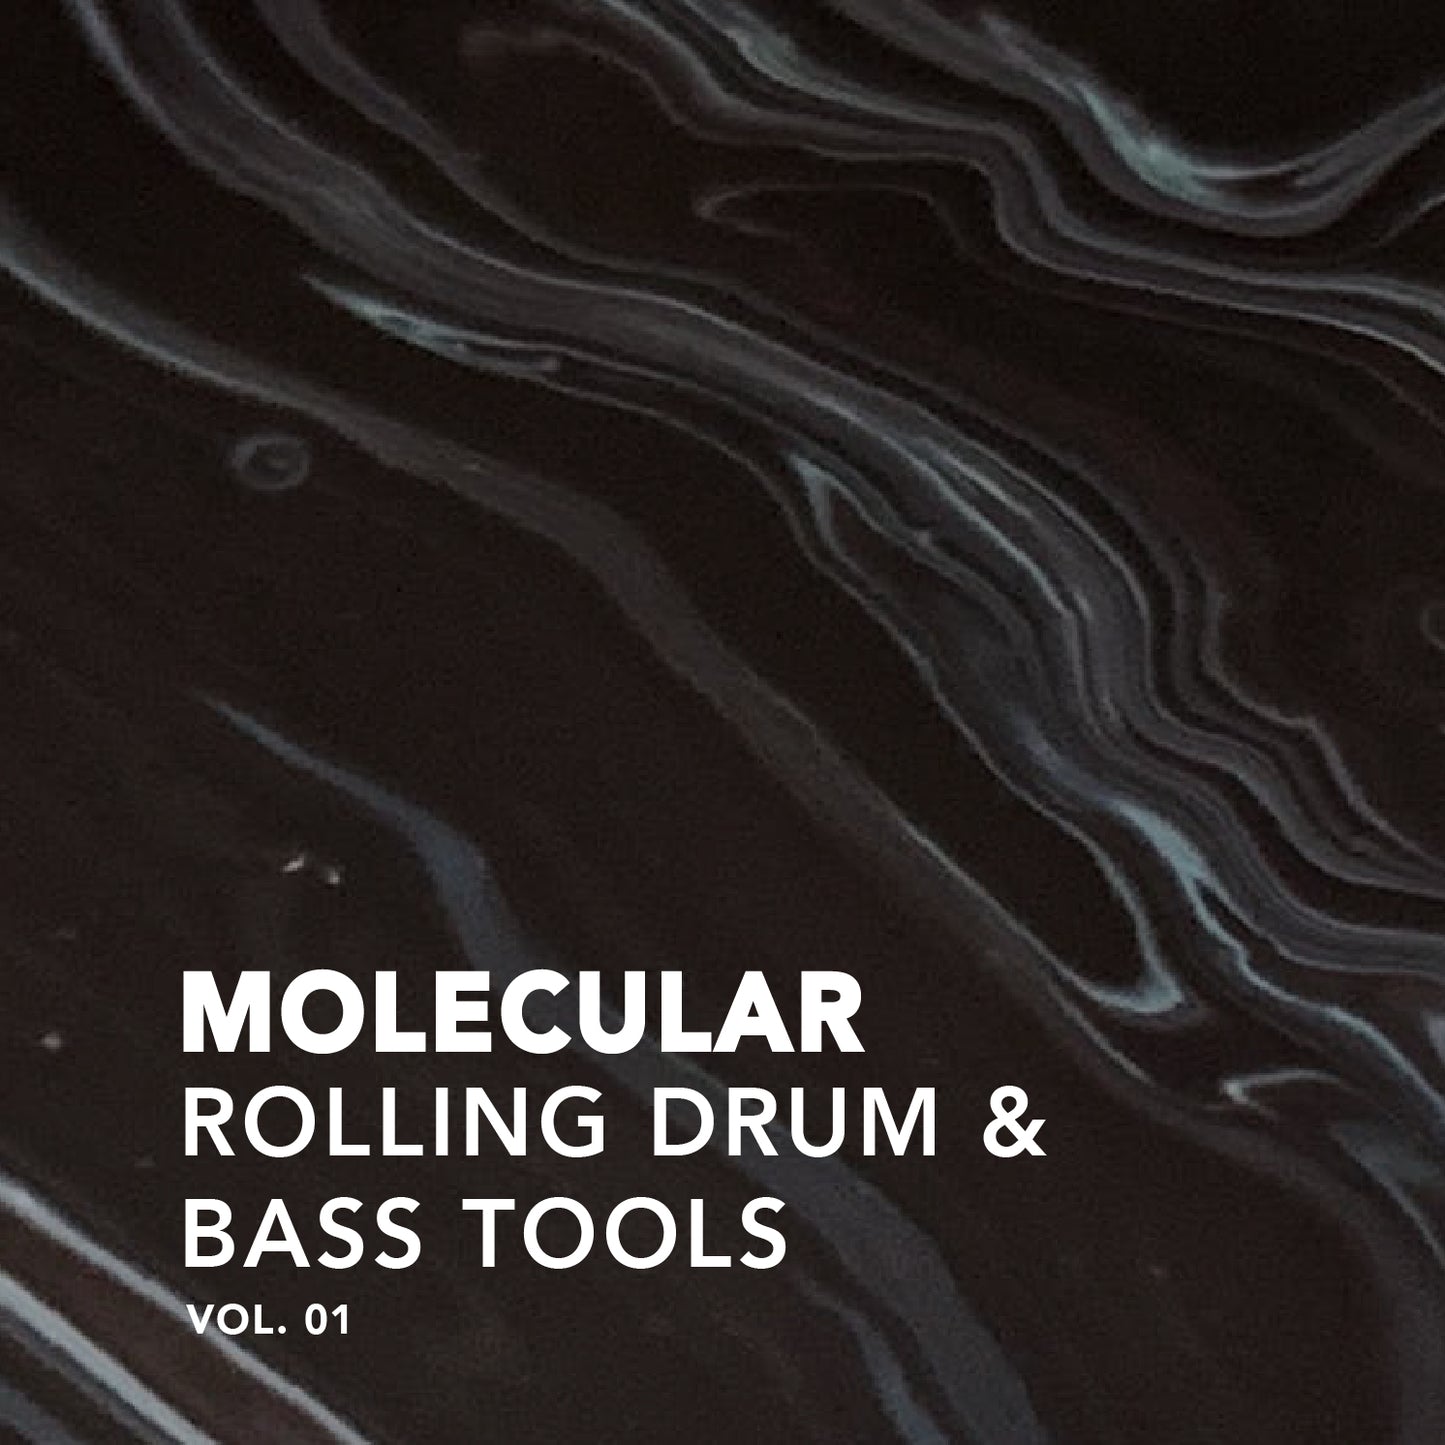 Rolling Drum & Bass Tools Vol. 01